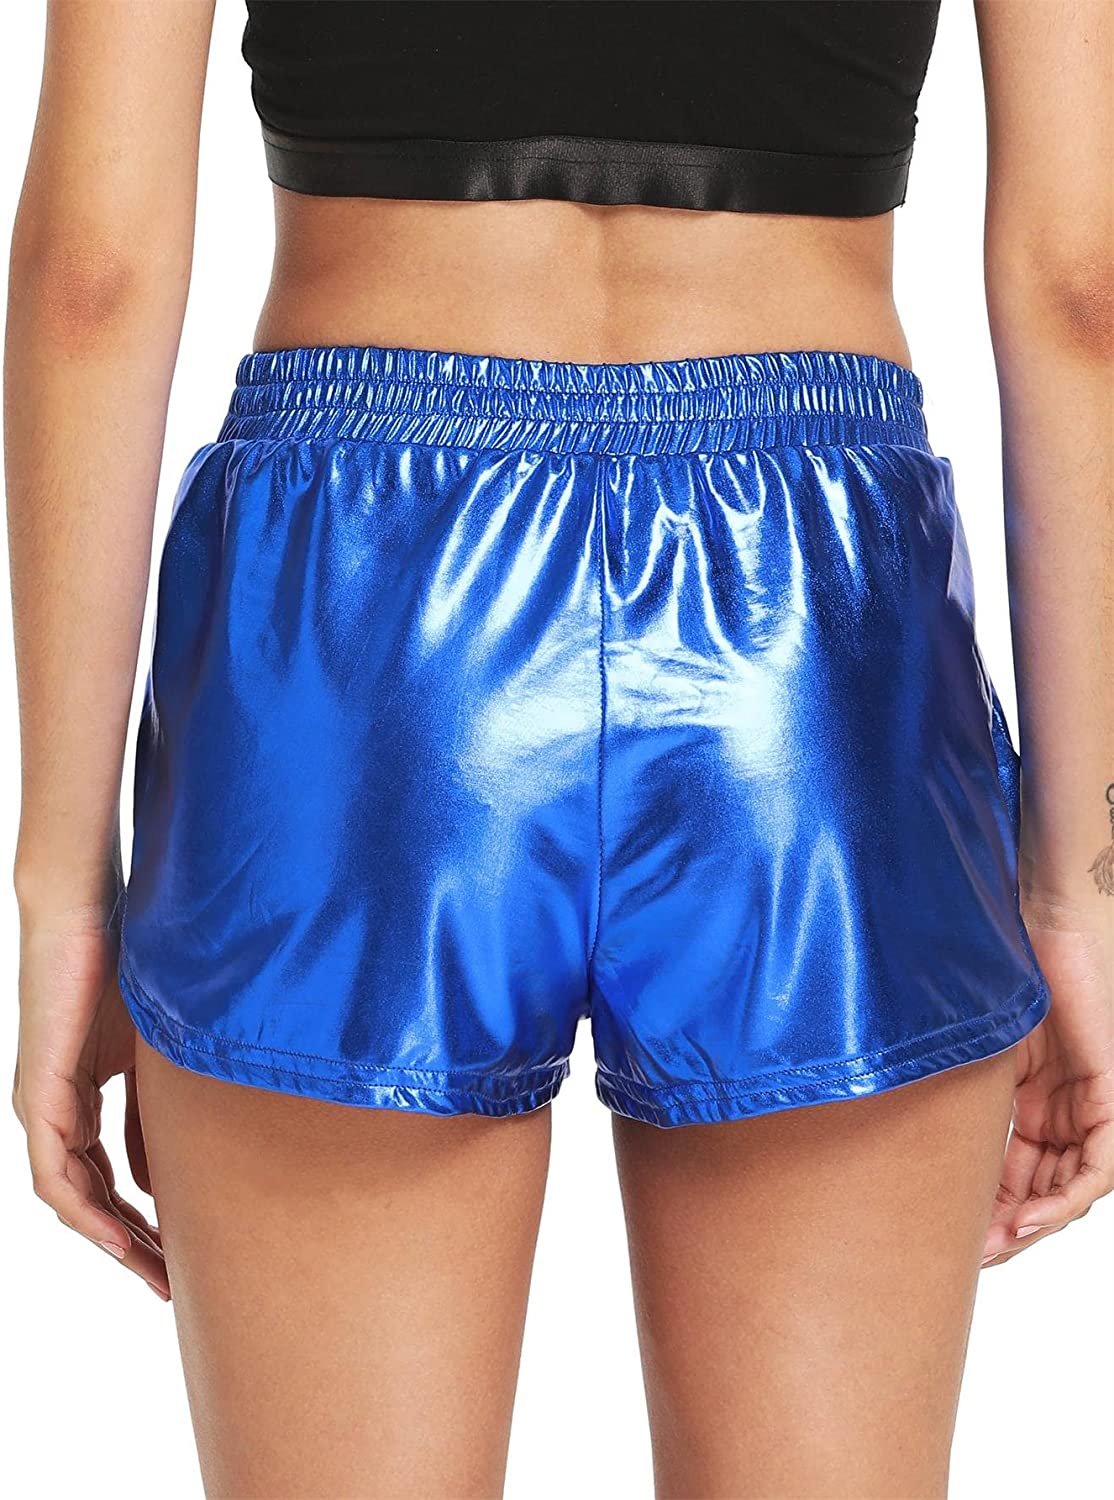 SweatyRocks Women's Metallic Shorts Elastic Waist Shiny Pants | eBay